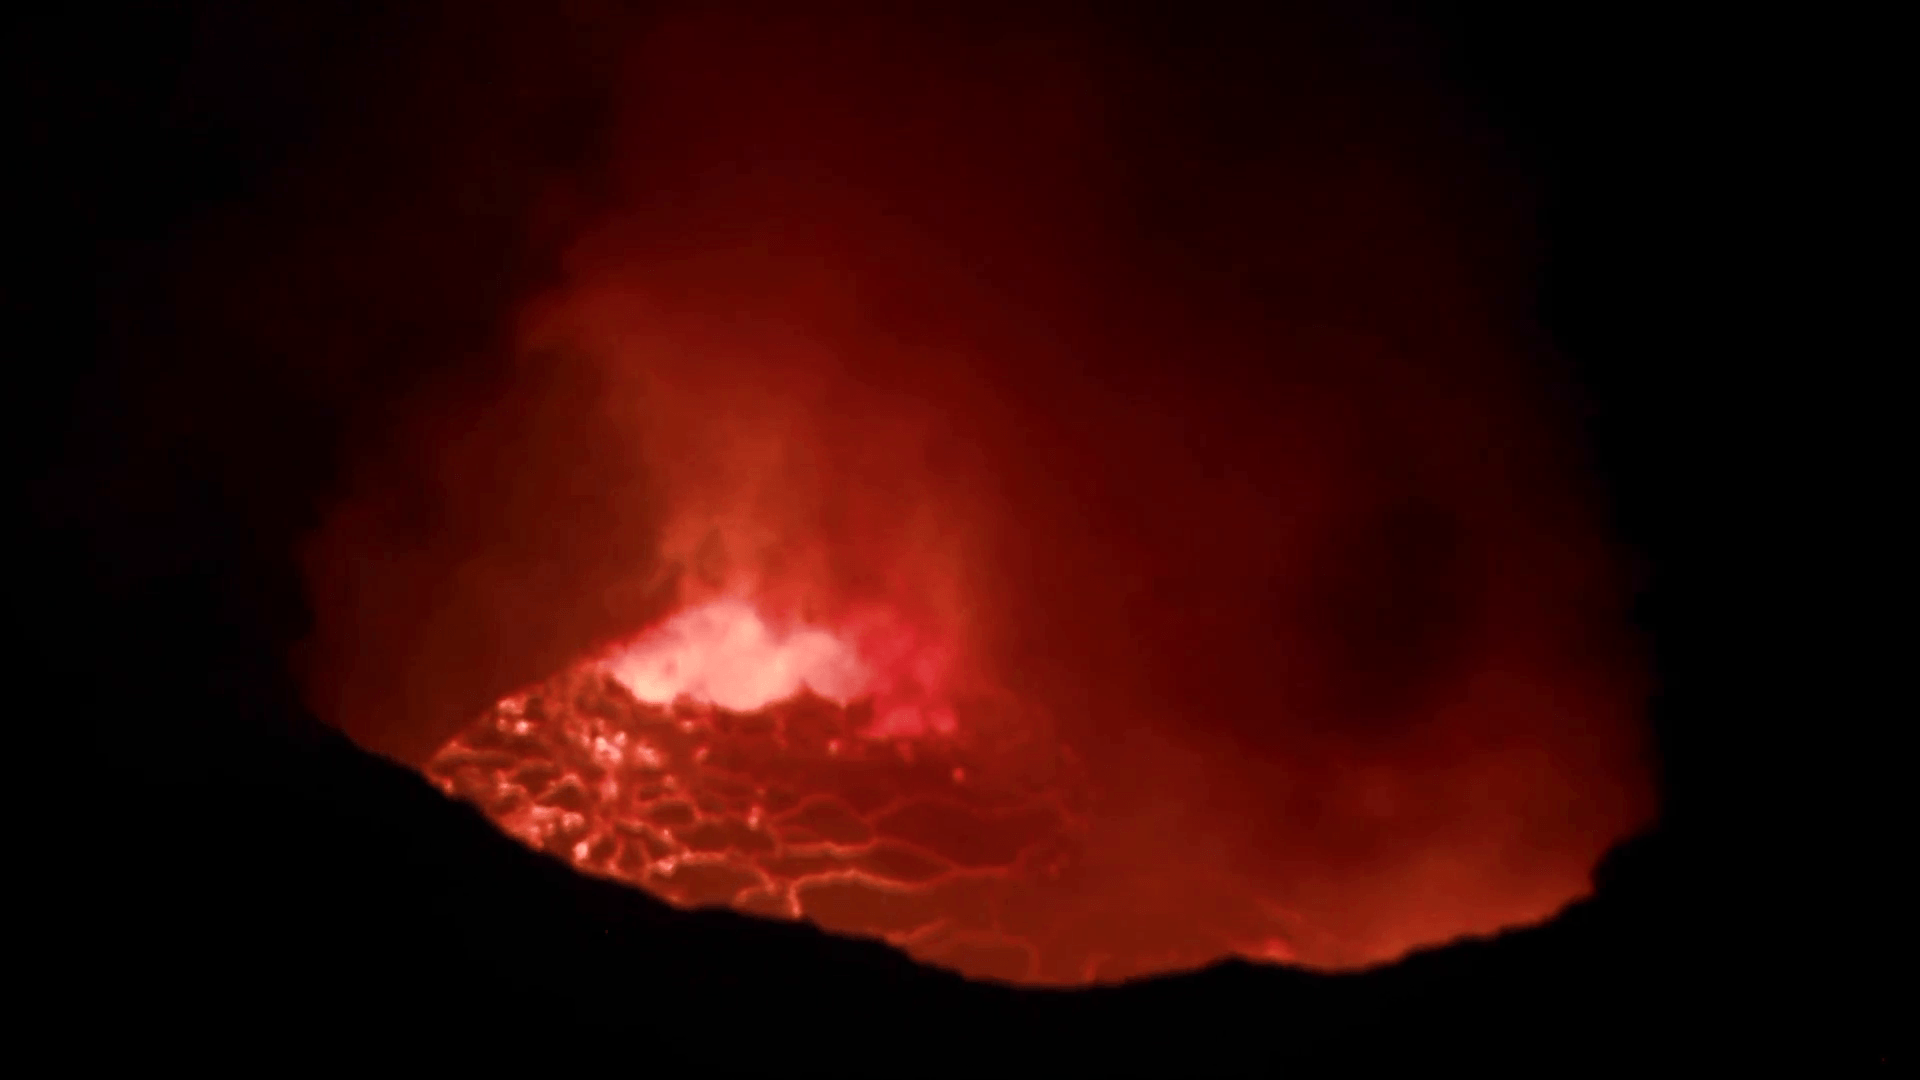 The Nyiragongo volcano erupts at night in the Democratic Republic